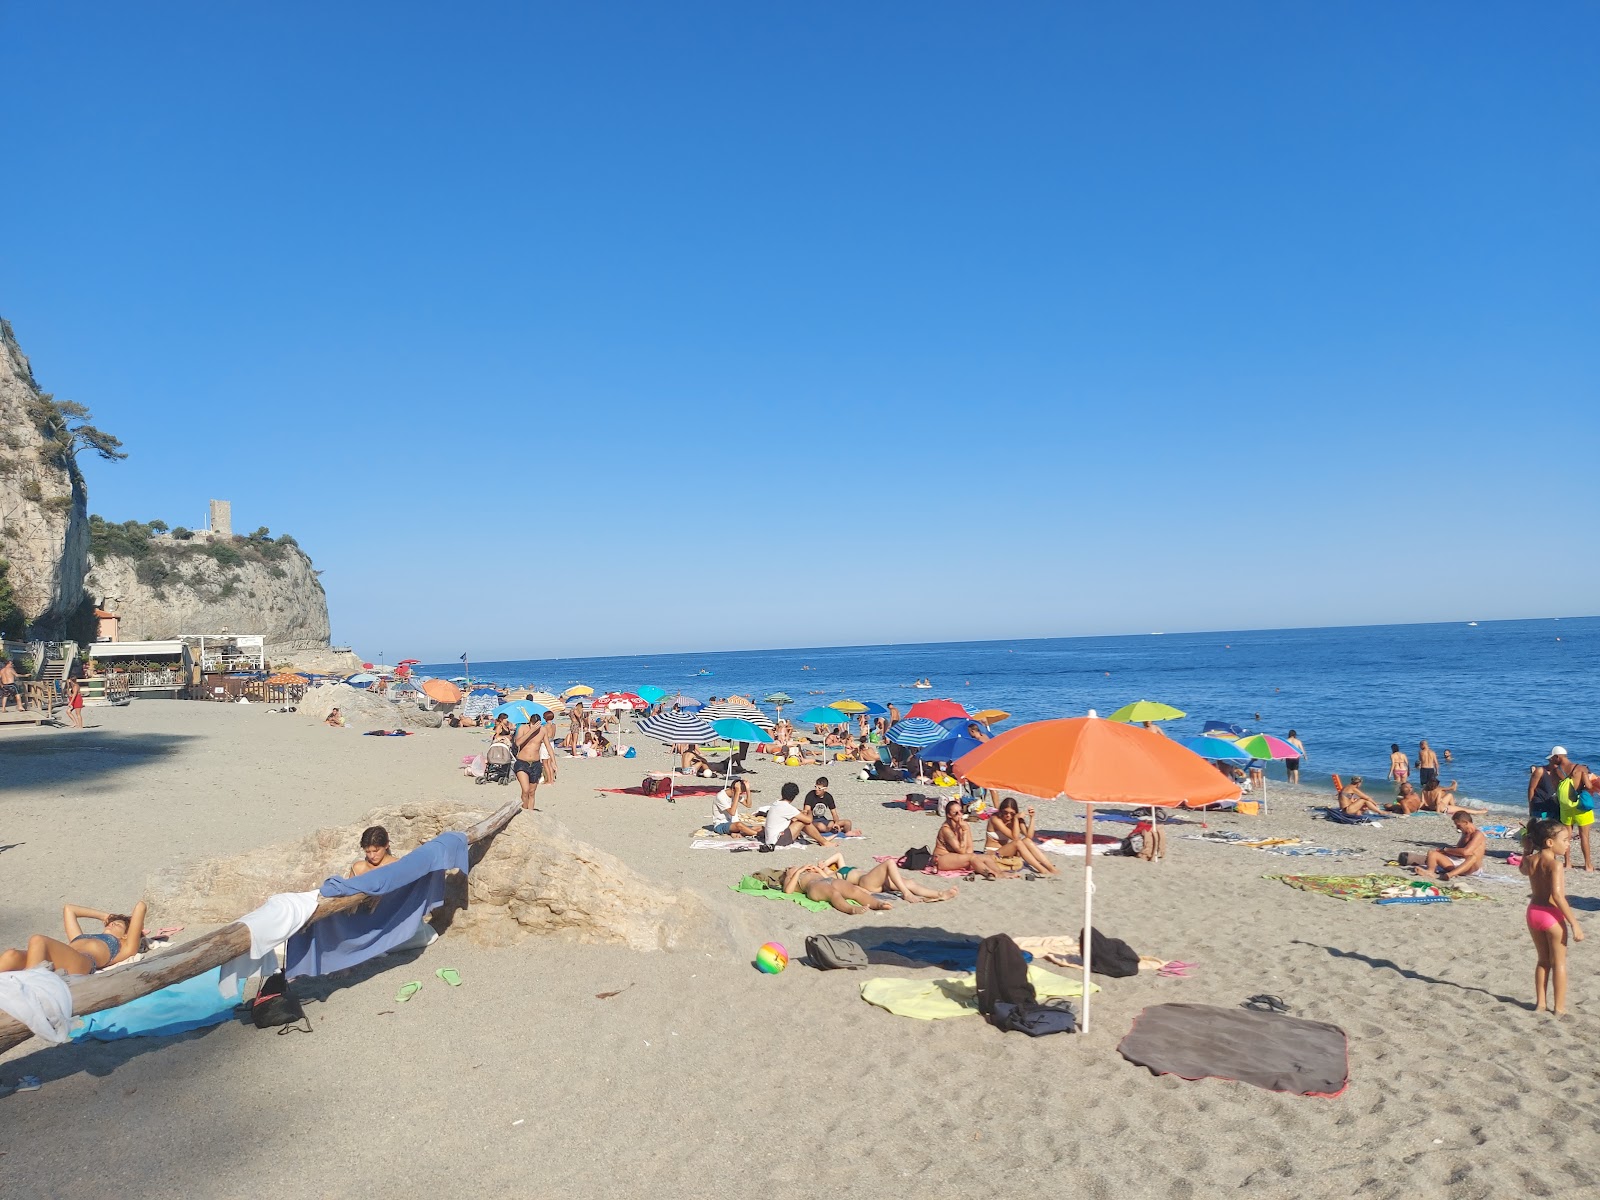 Foto de Spiaggia libera del Castelletto com alto nível de limpeza